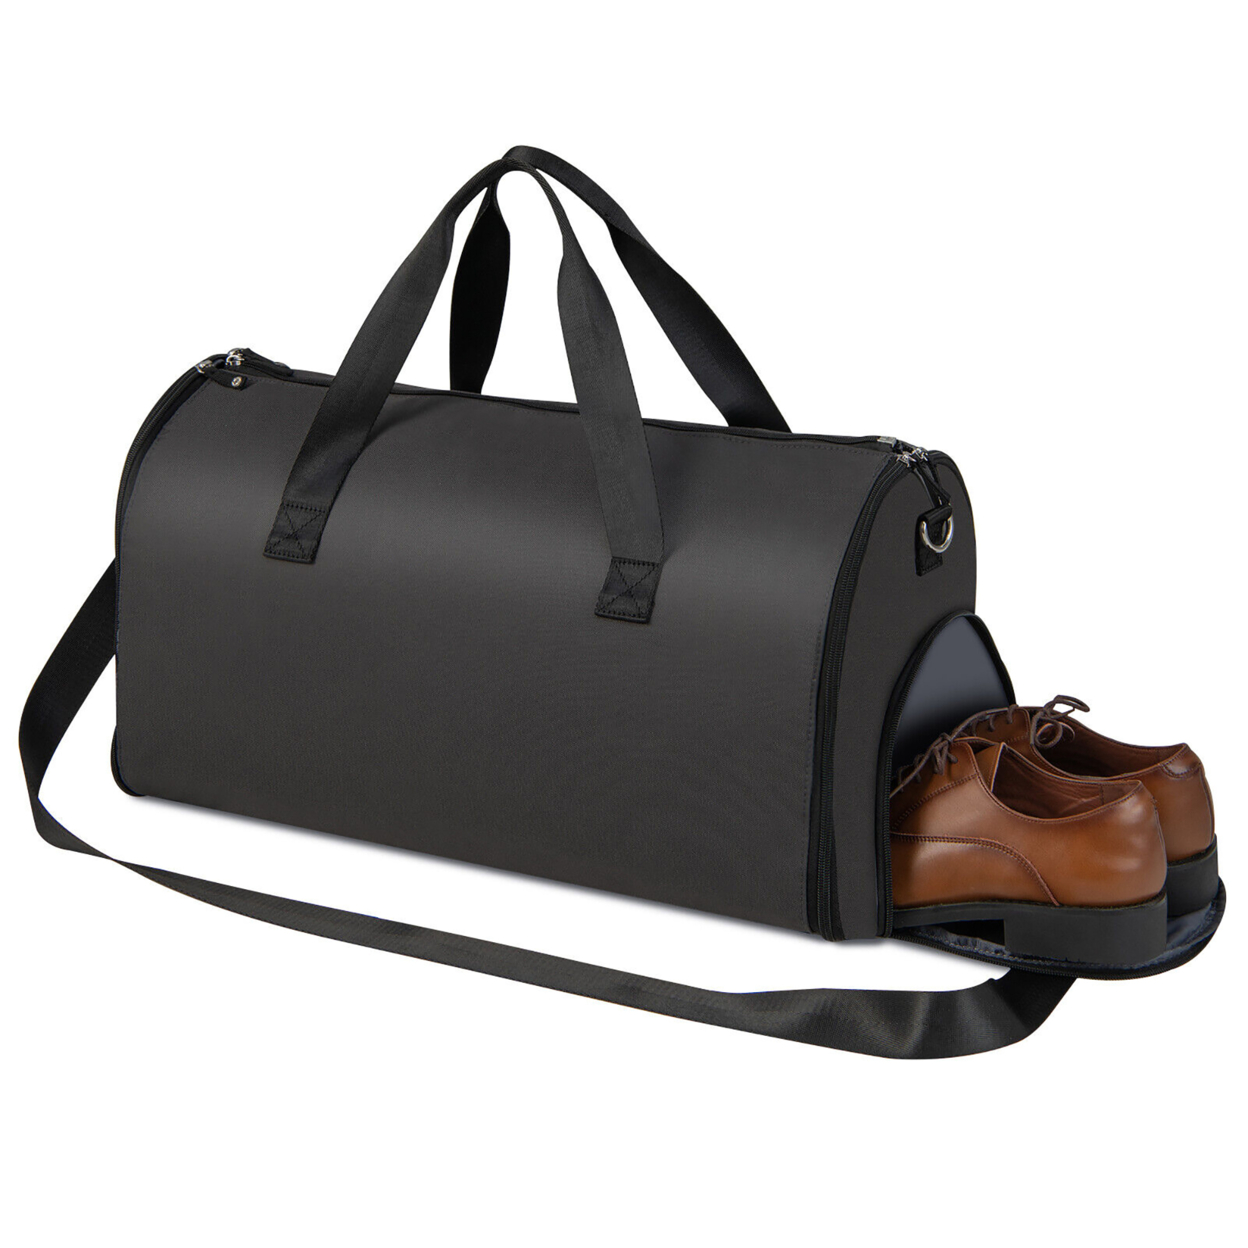 2 In 1 Duffel Garment Bag Hanging Suit Travel Bag W/ Shoe Compartment & Strap Light - Black